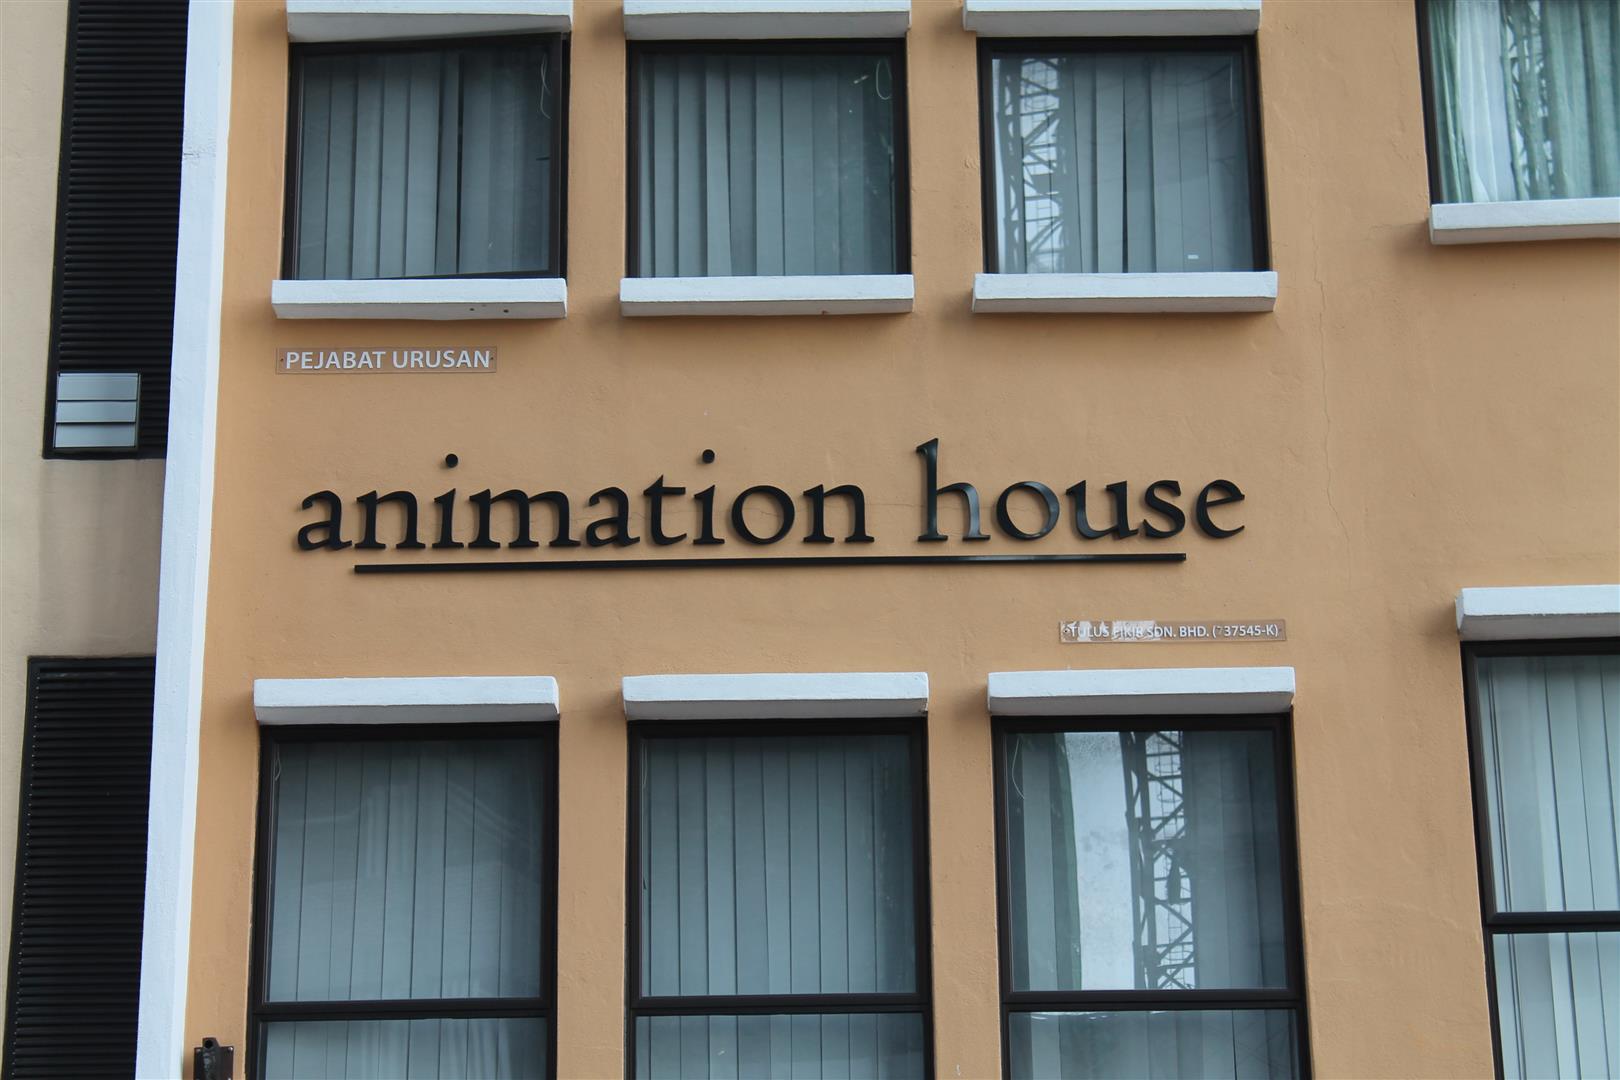 Tulus Fikir - Visit to Local Animation Company 32